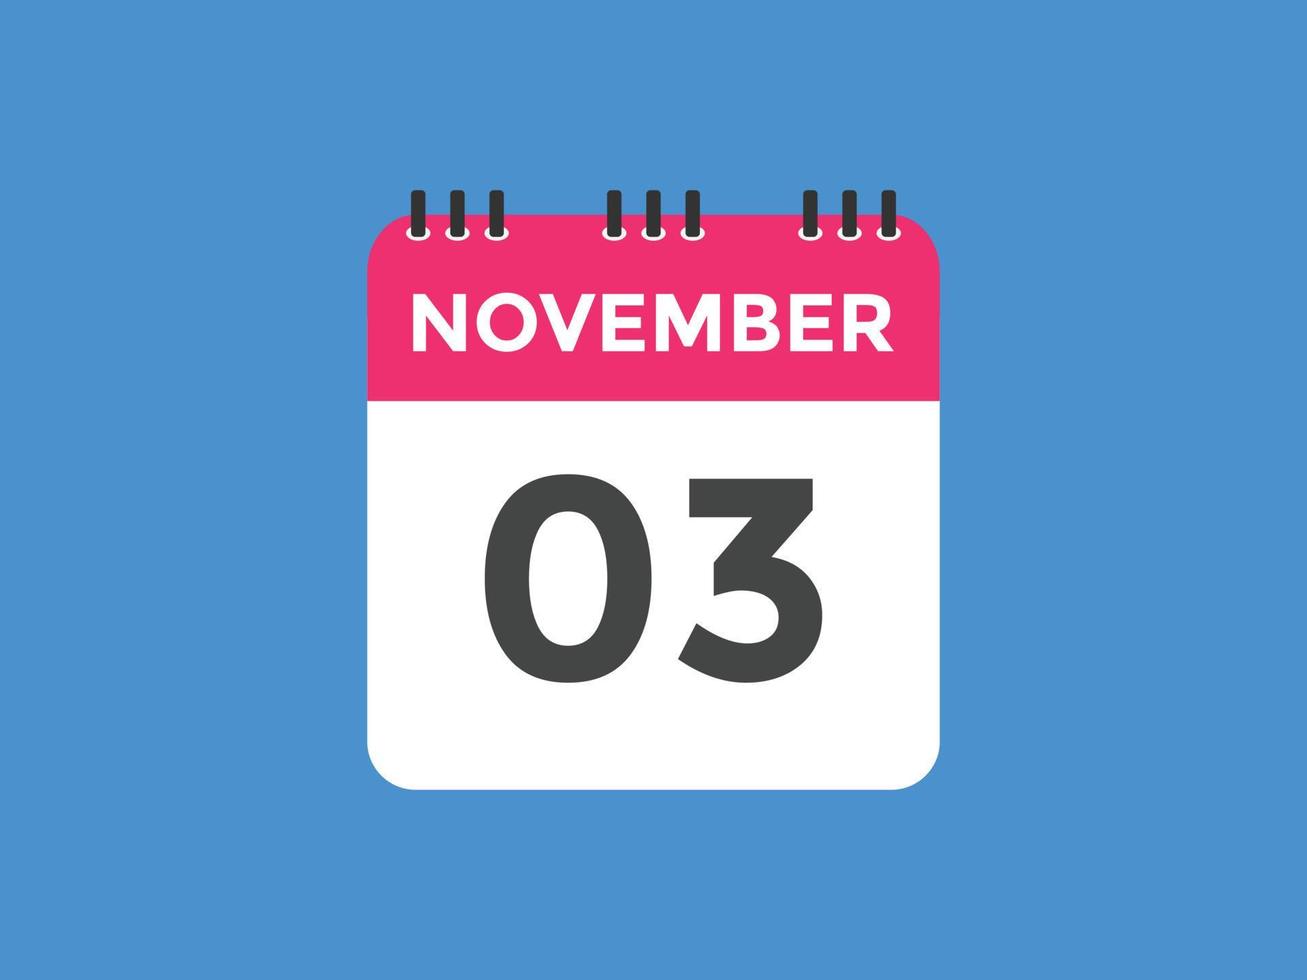 november 3 calendar reminder. 3rd november daily calendar icon template. Calendar 3rd november icon Design template. Vector illustration